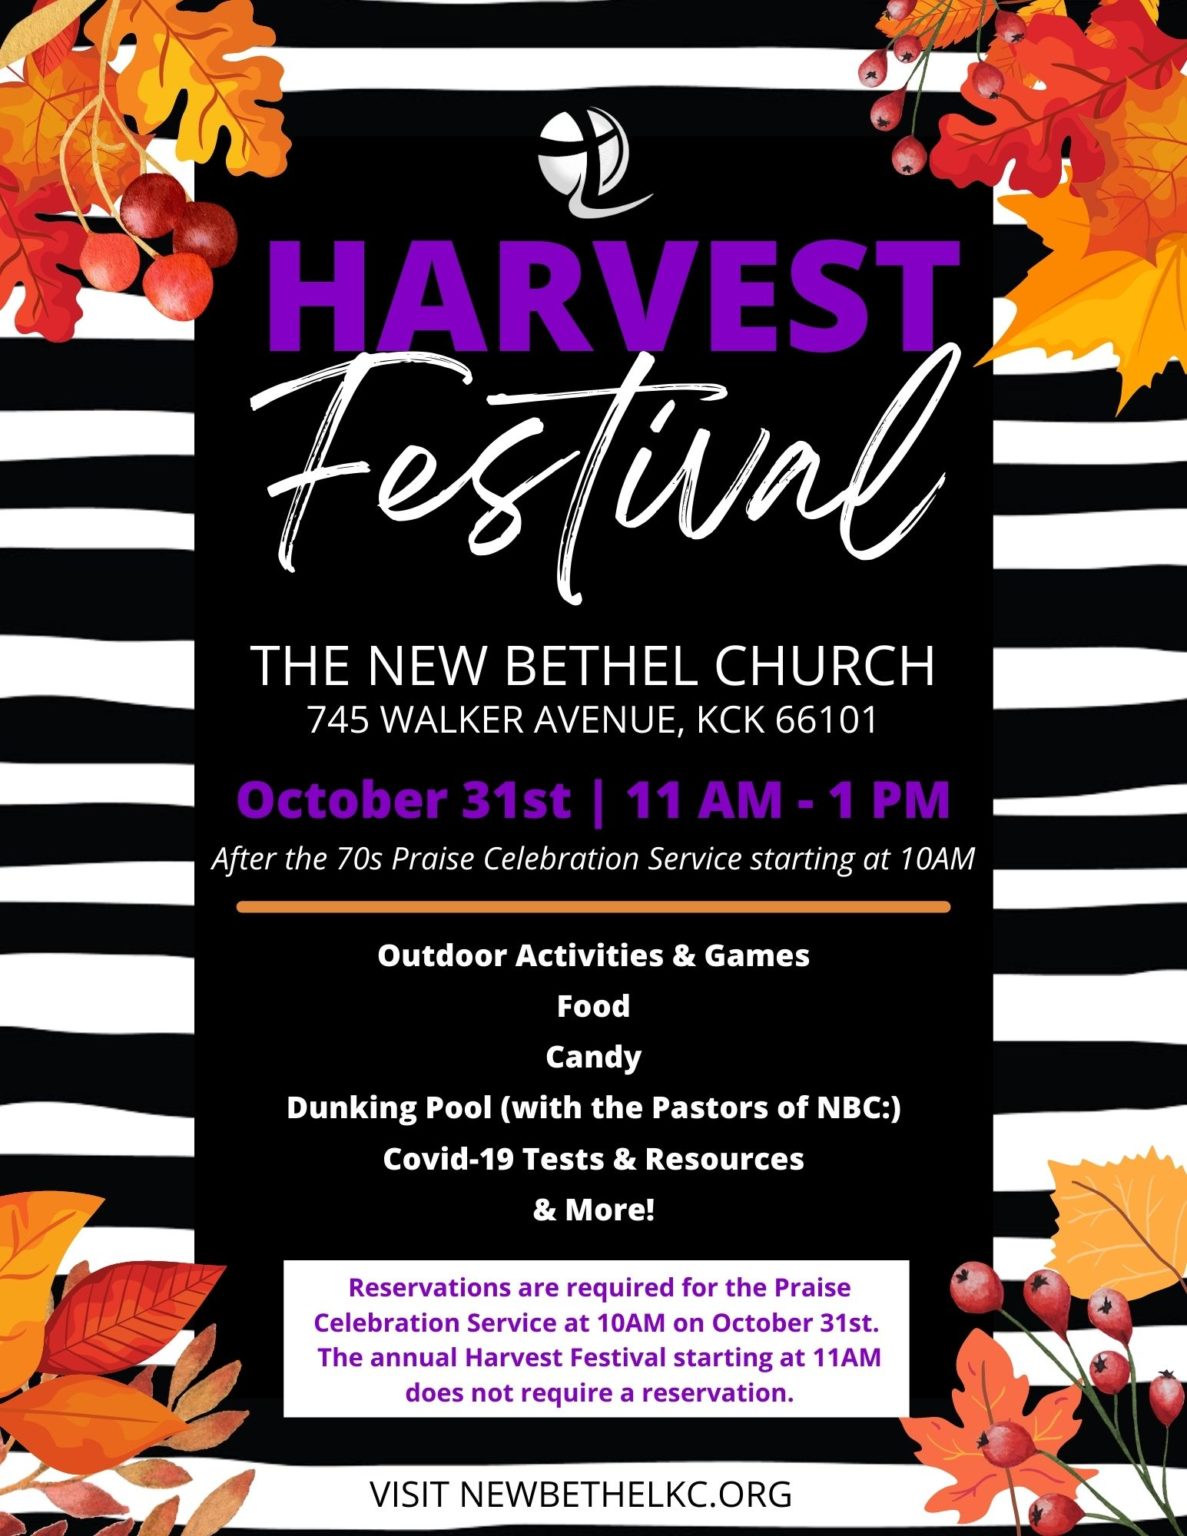 Harvest Festival 2021 The New Bethel Church